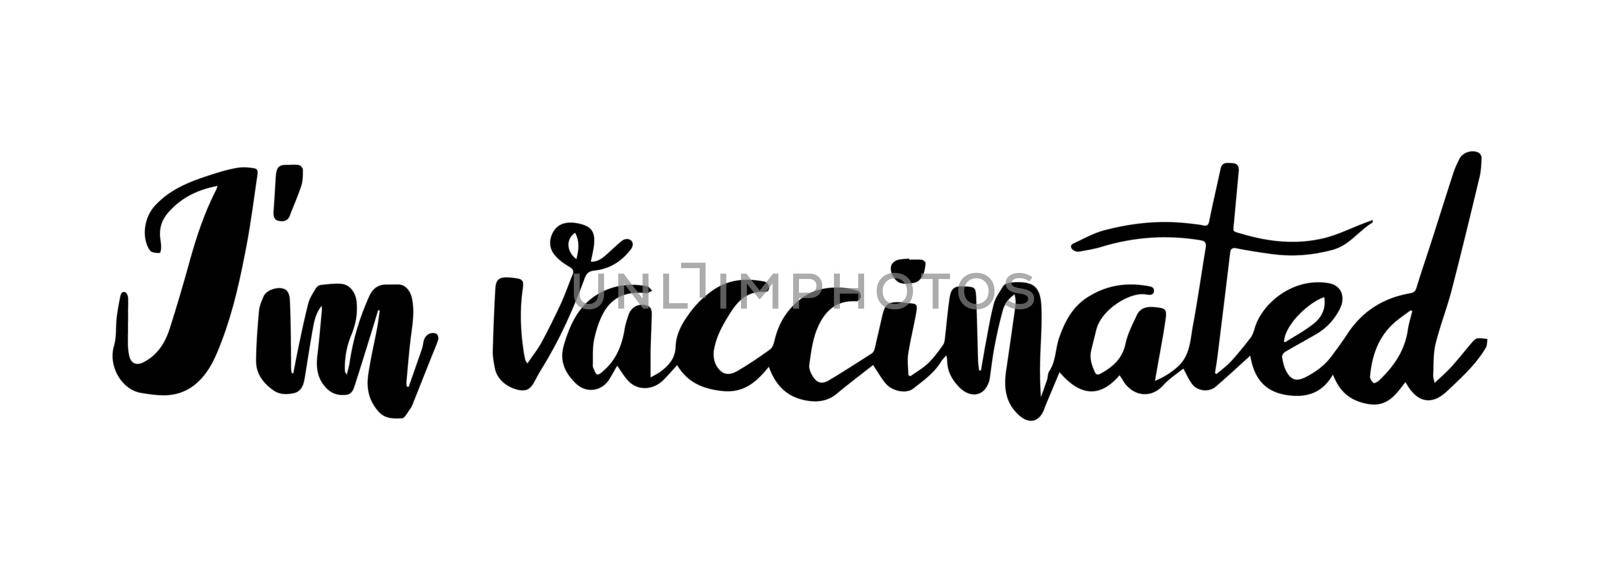 I am vaccinated hand written lettering. Funny masn design. Corona virus vaccine concept by Elena_Garder